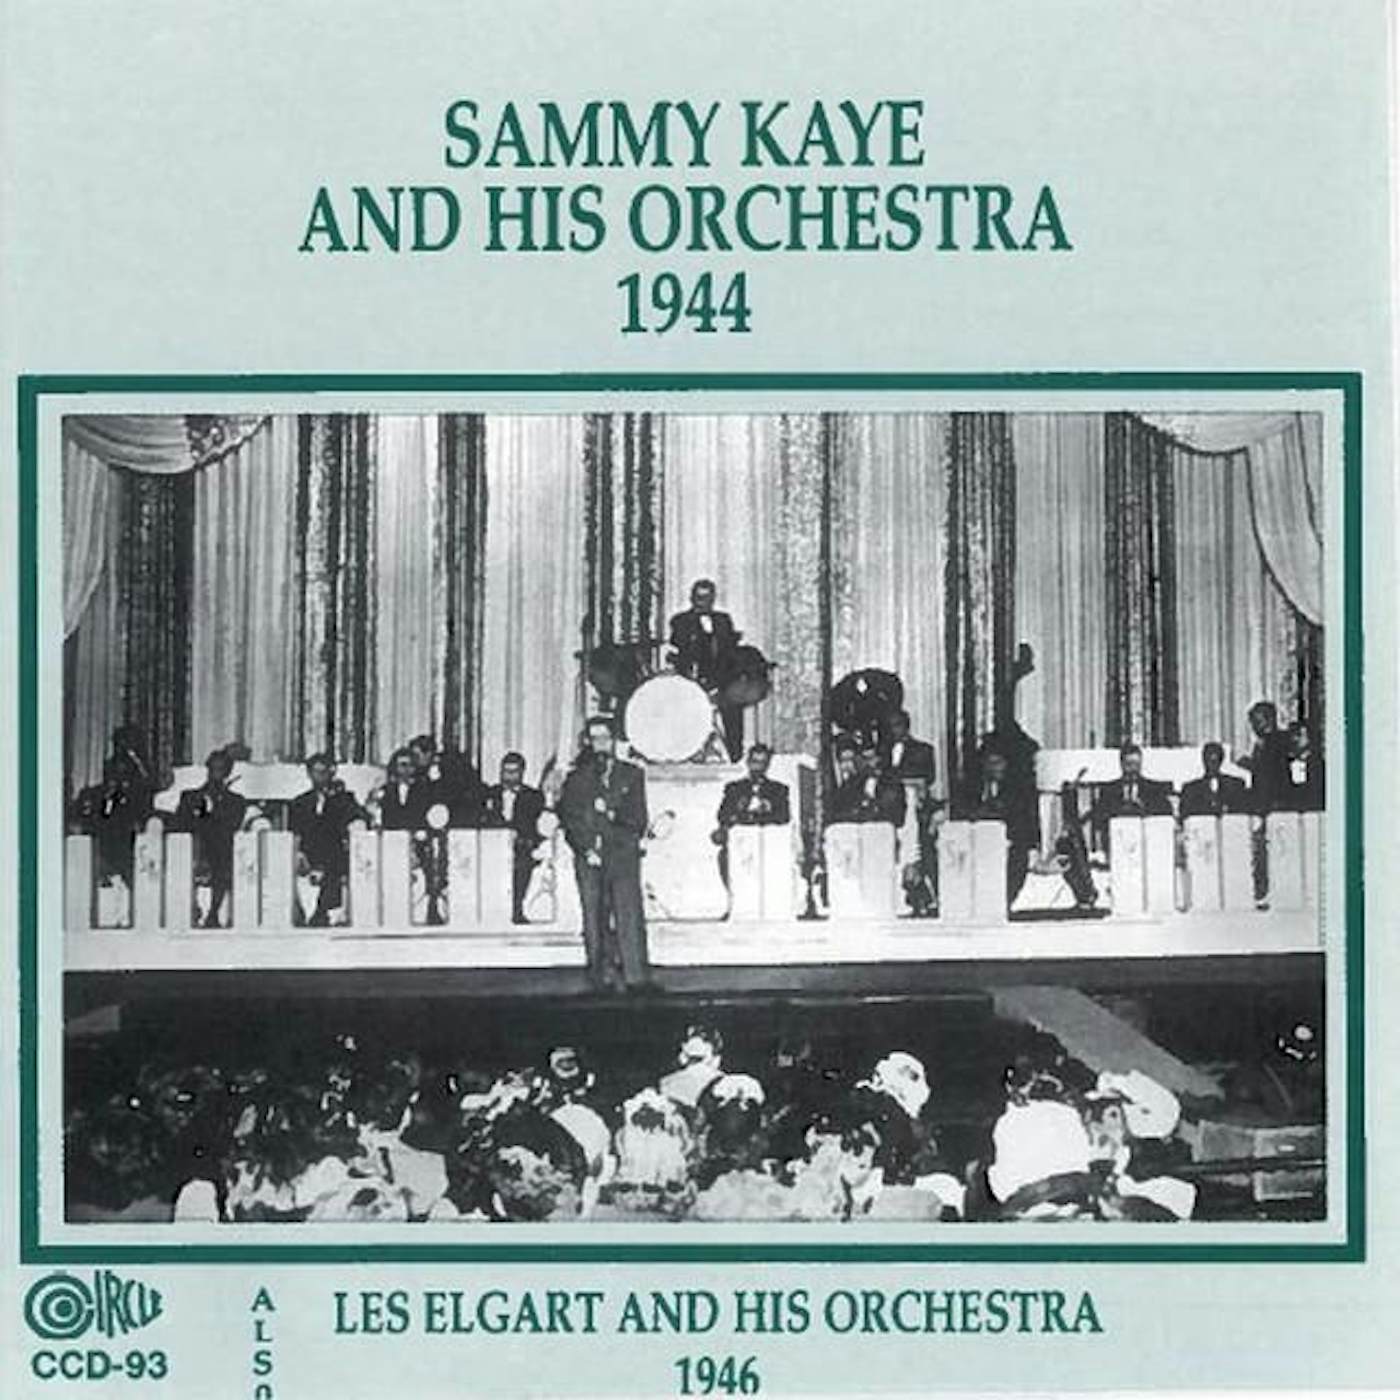 Sammy Kaye and His Orchestra